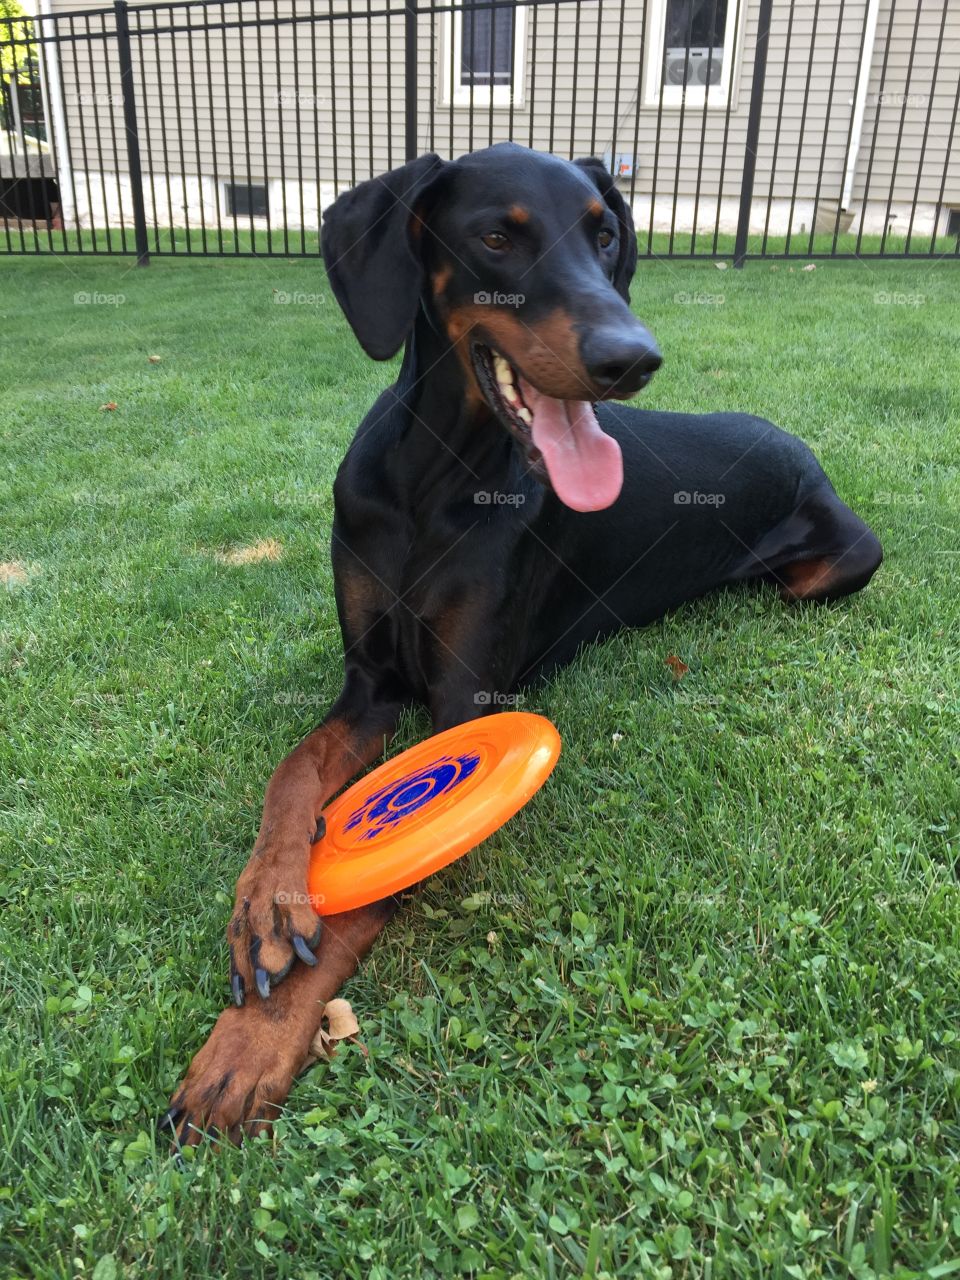 Doberman Pinscher with his frisbee